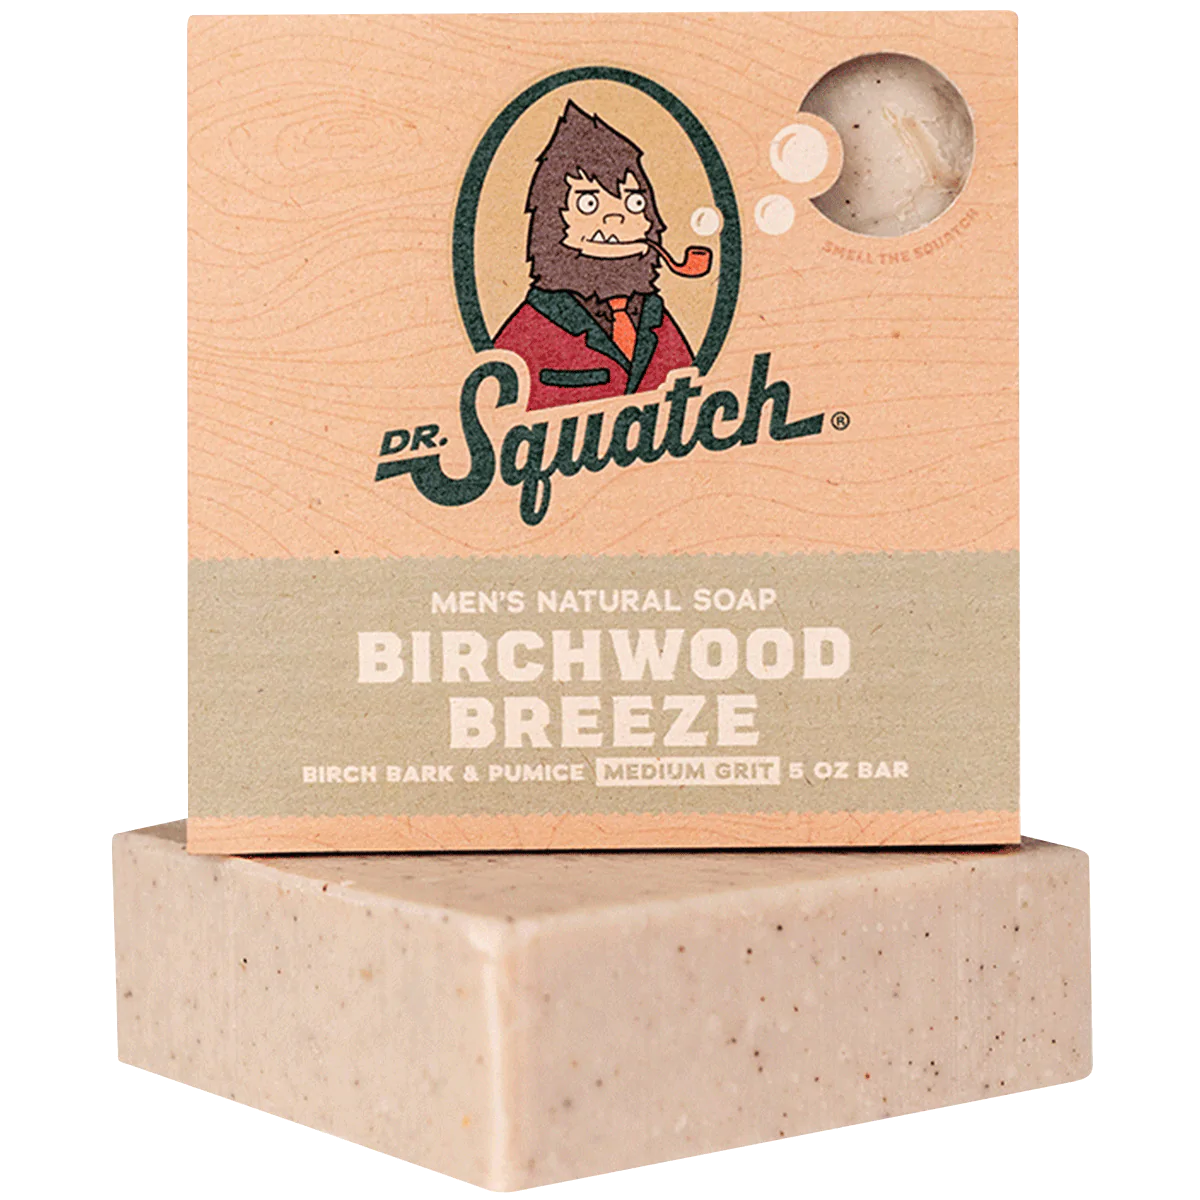 Birchwood Breeze Bar Soap, 5 oz